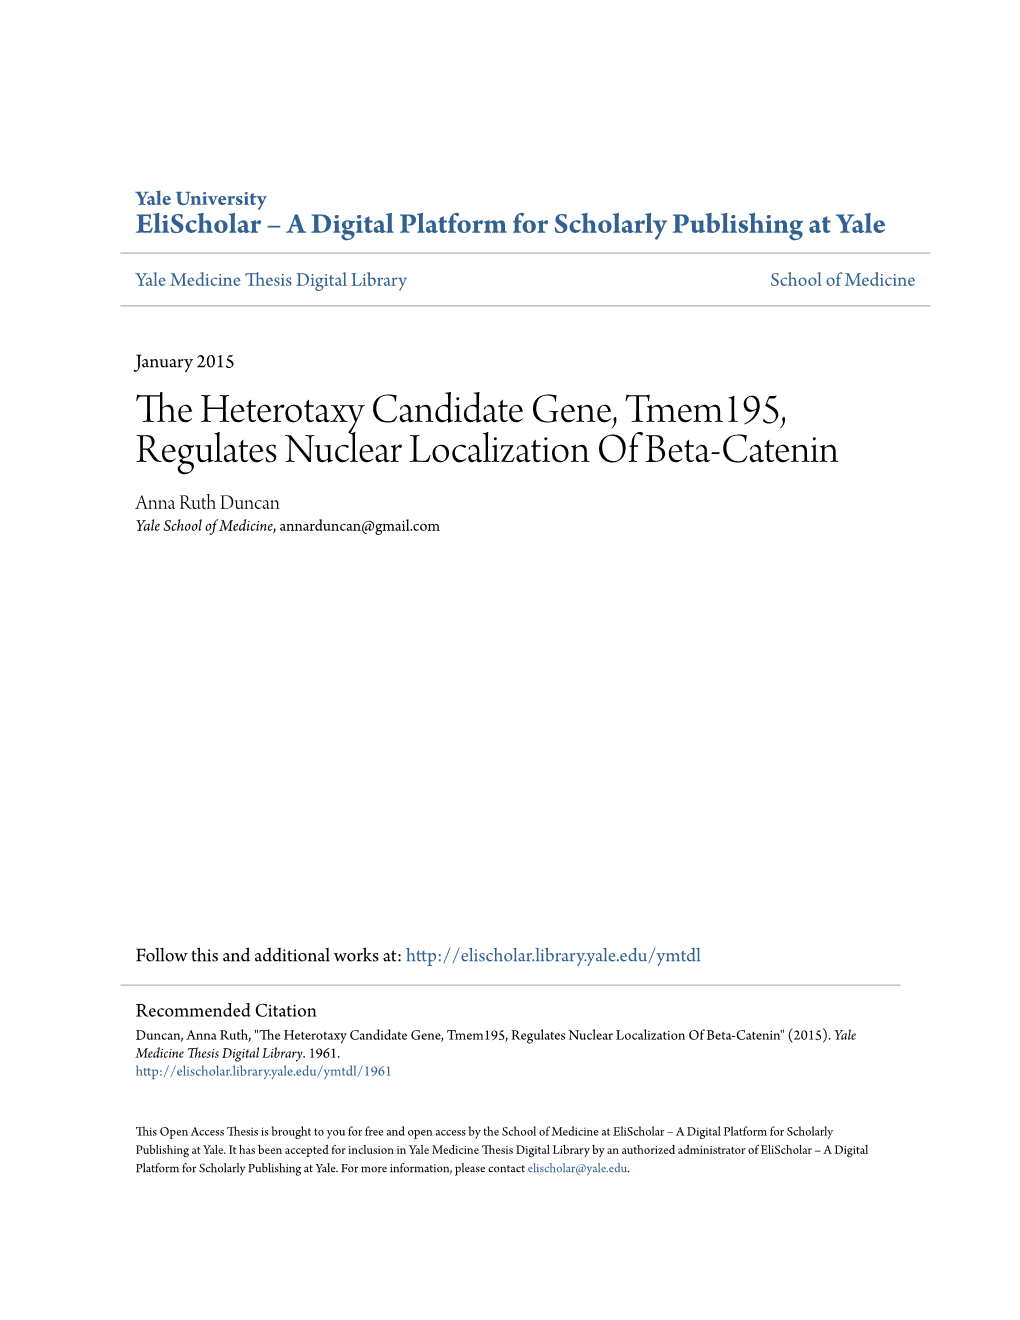 The Heterotaxy Candidate Gene, TMEM195, Regulates Nuclear Localization of Beta-Catenin